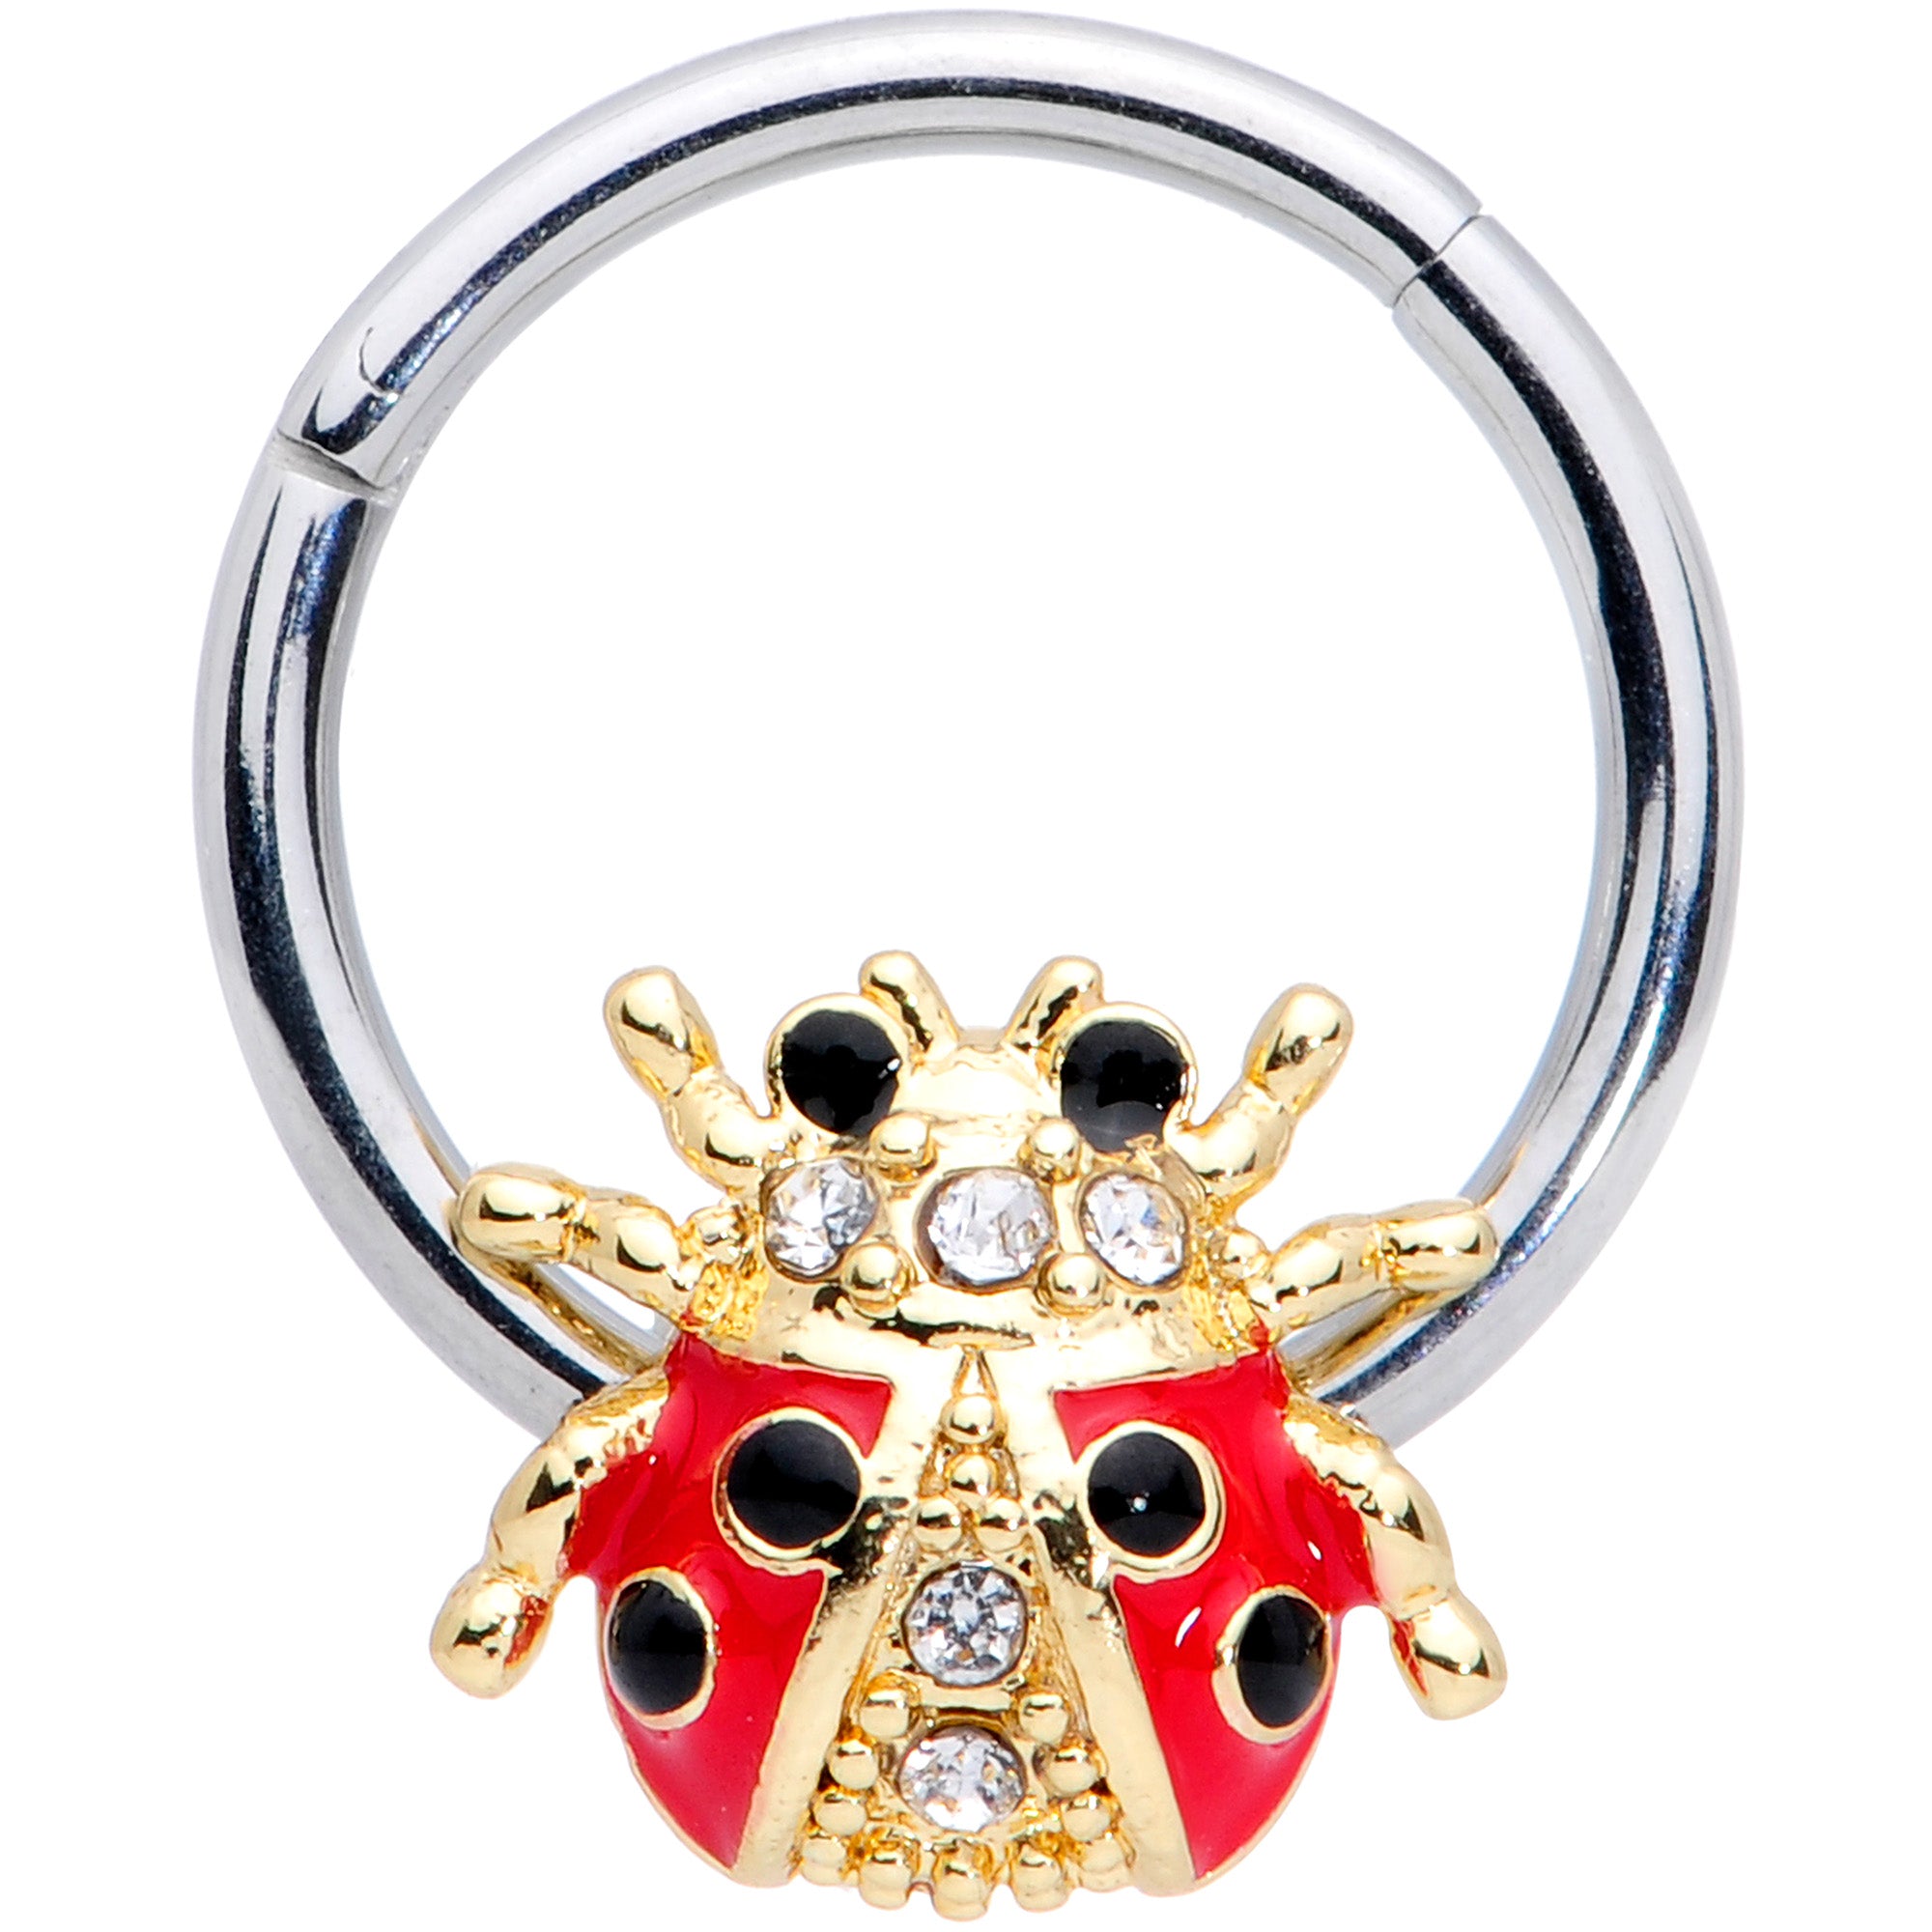 Multi-Colored Crawling Ladybug Bracelet with Diamond and Gemstone in 1